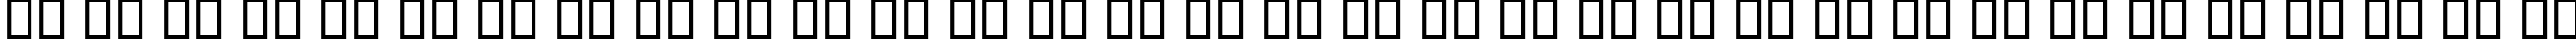 Пример написания русского алфавита шрифтом B Nikoo Italic